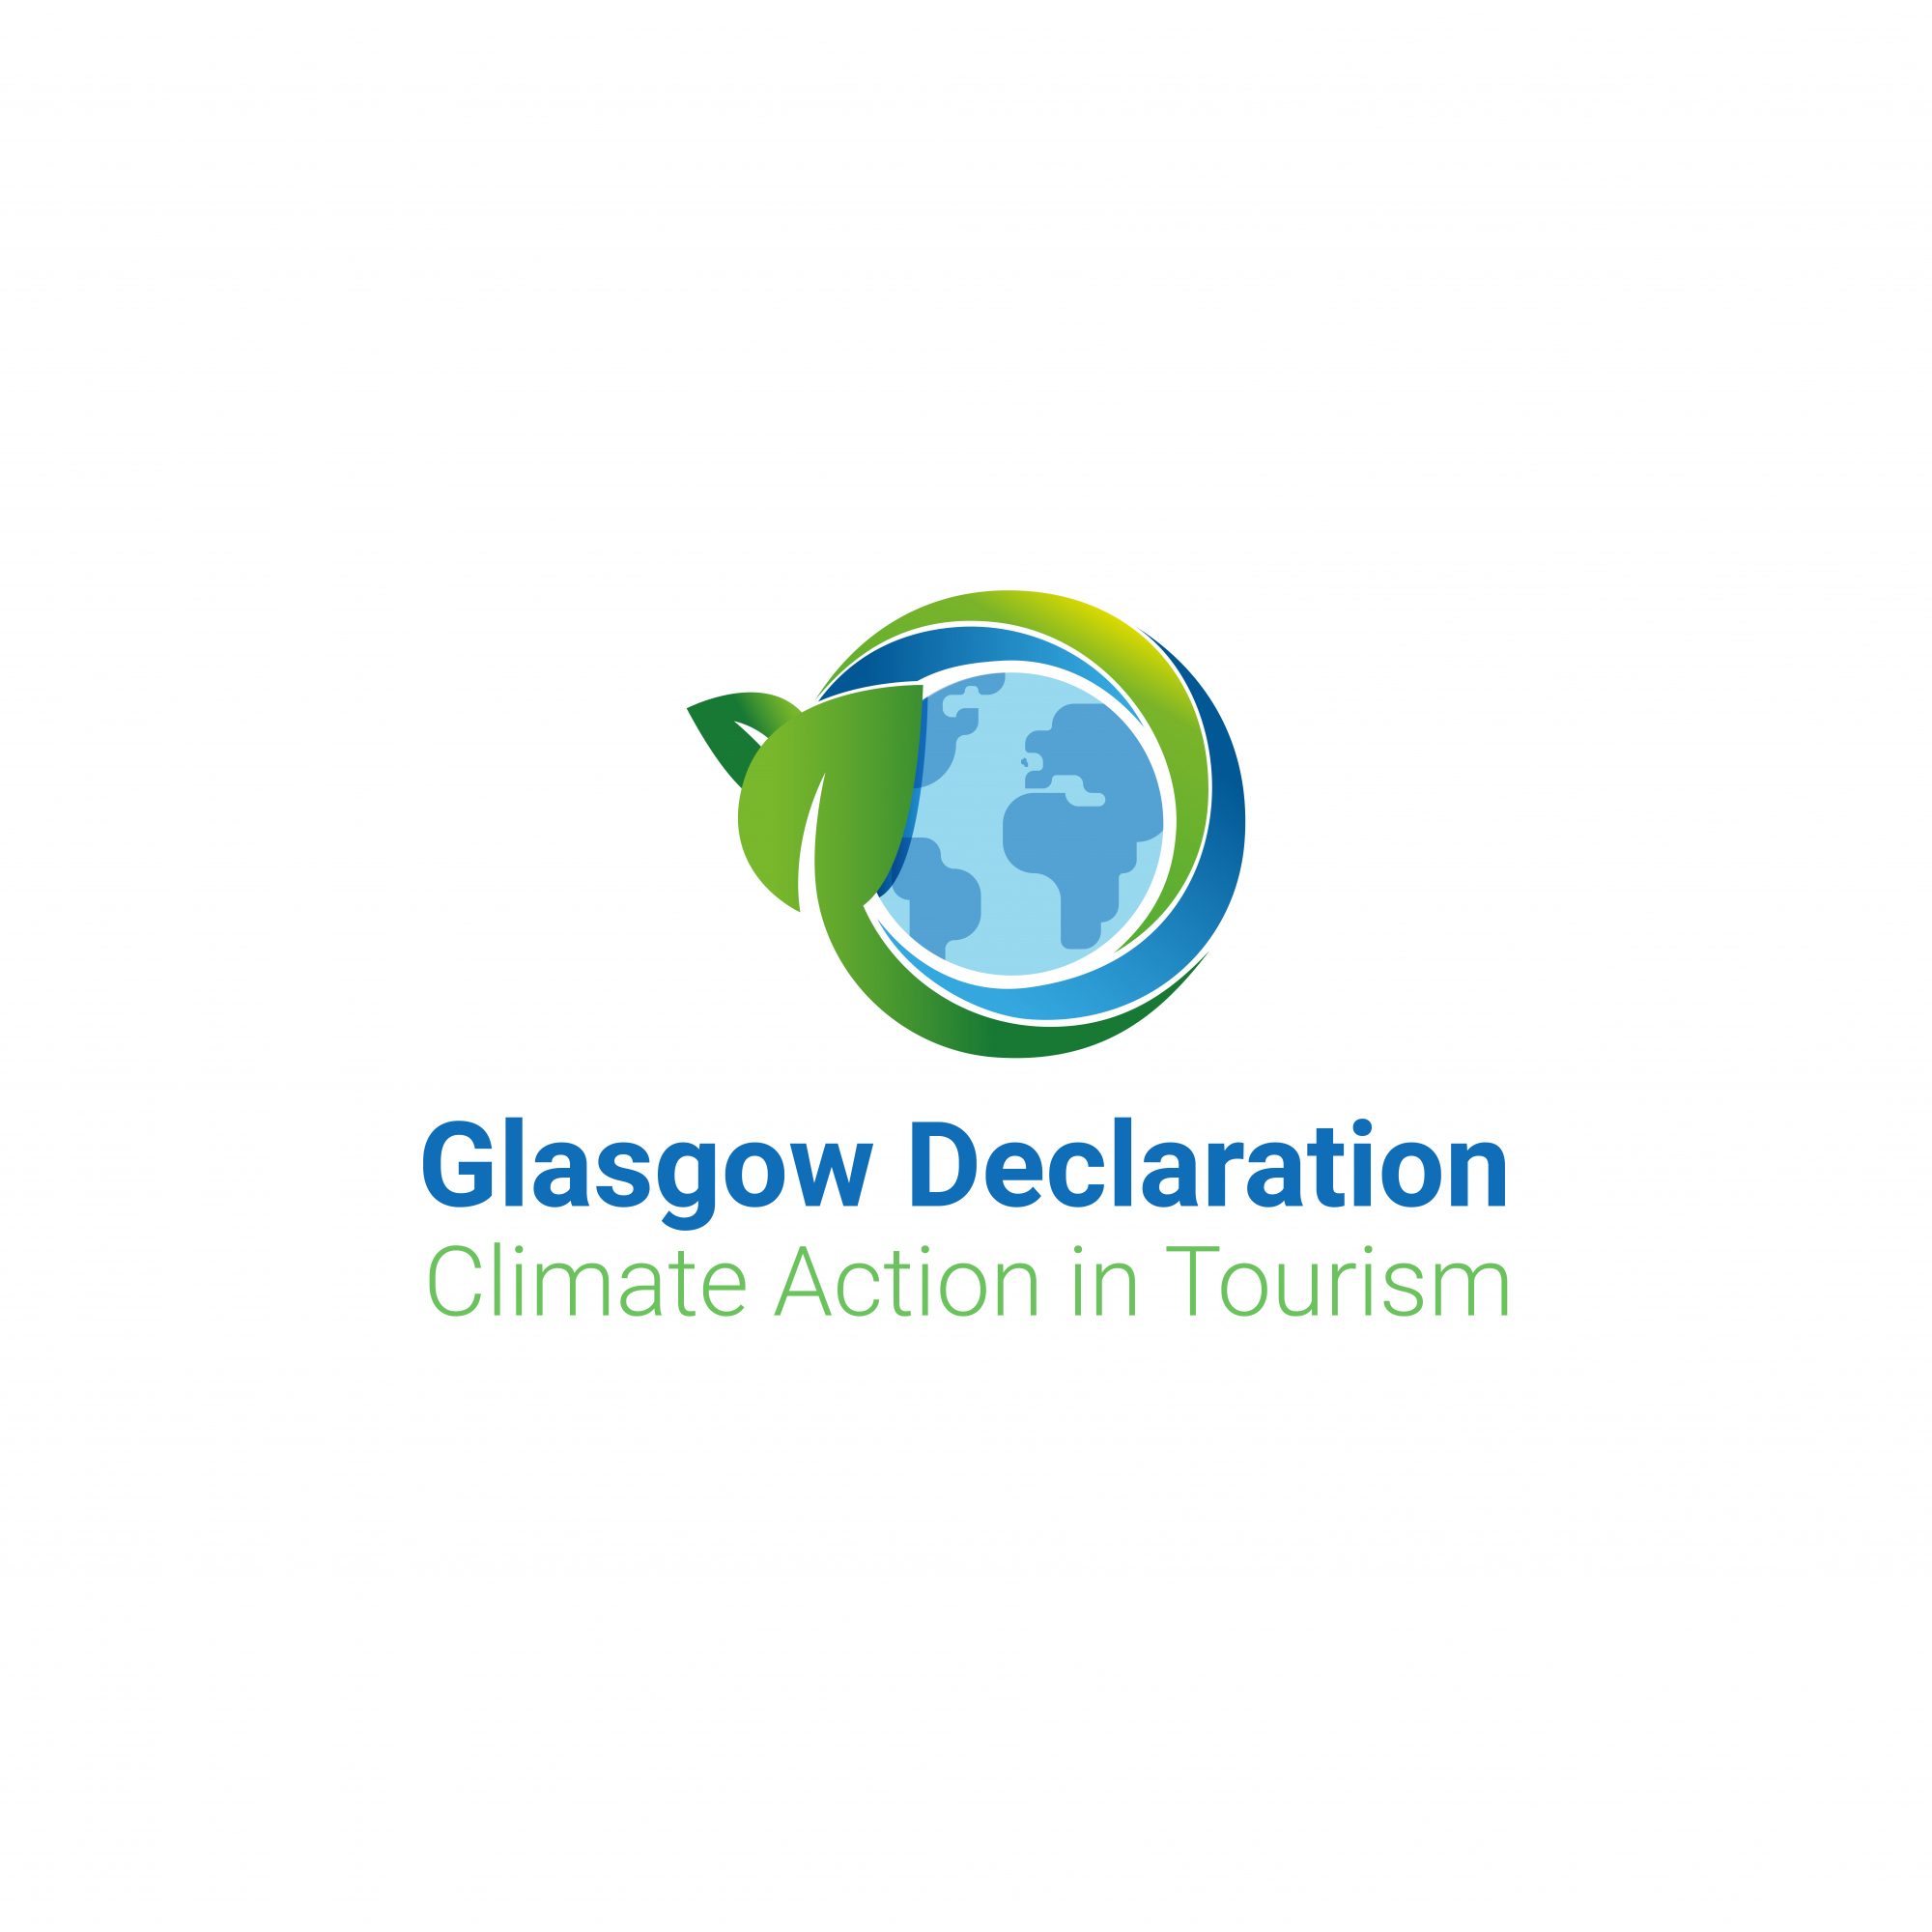 GlasgowDeclarationLogo_ok-02